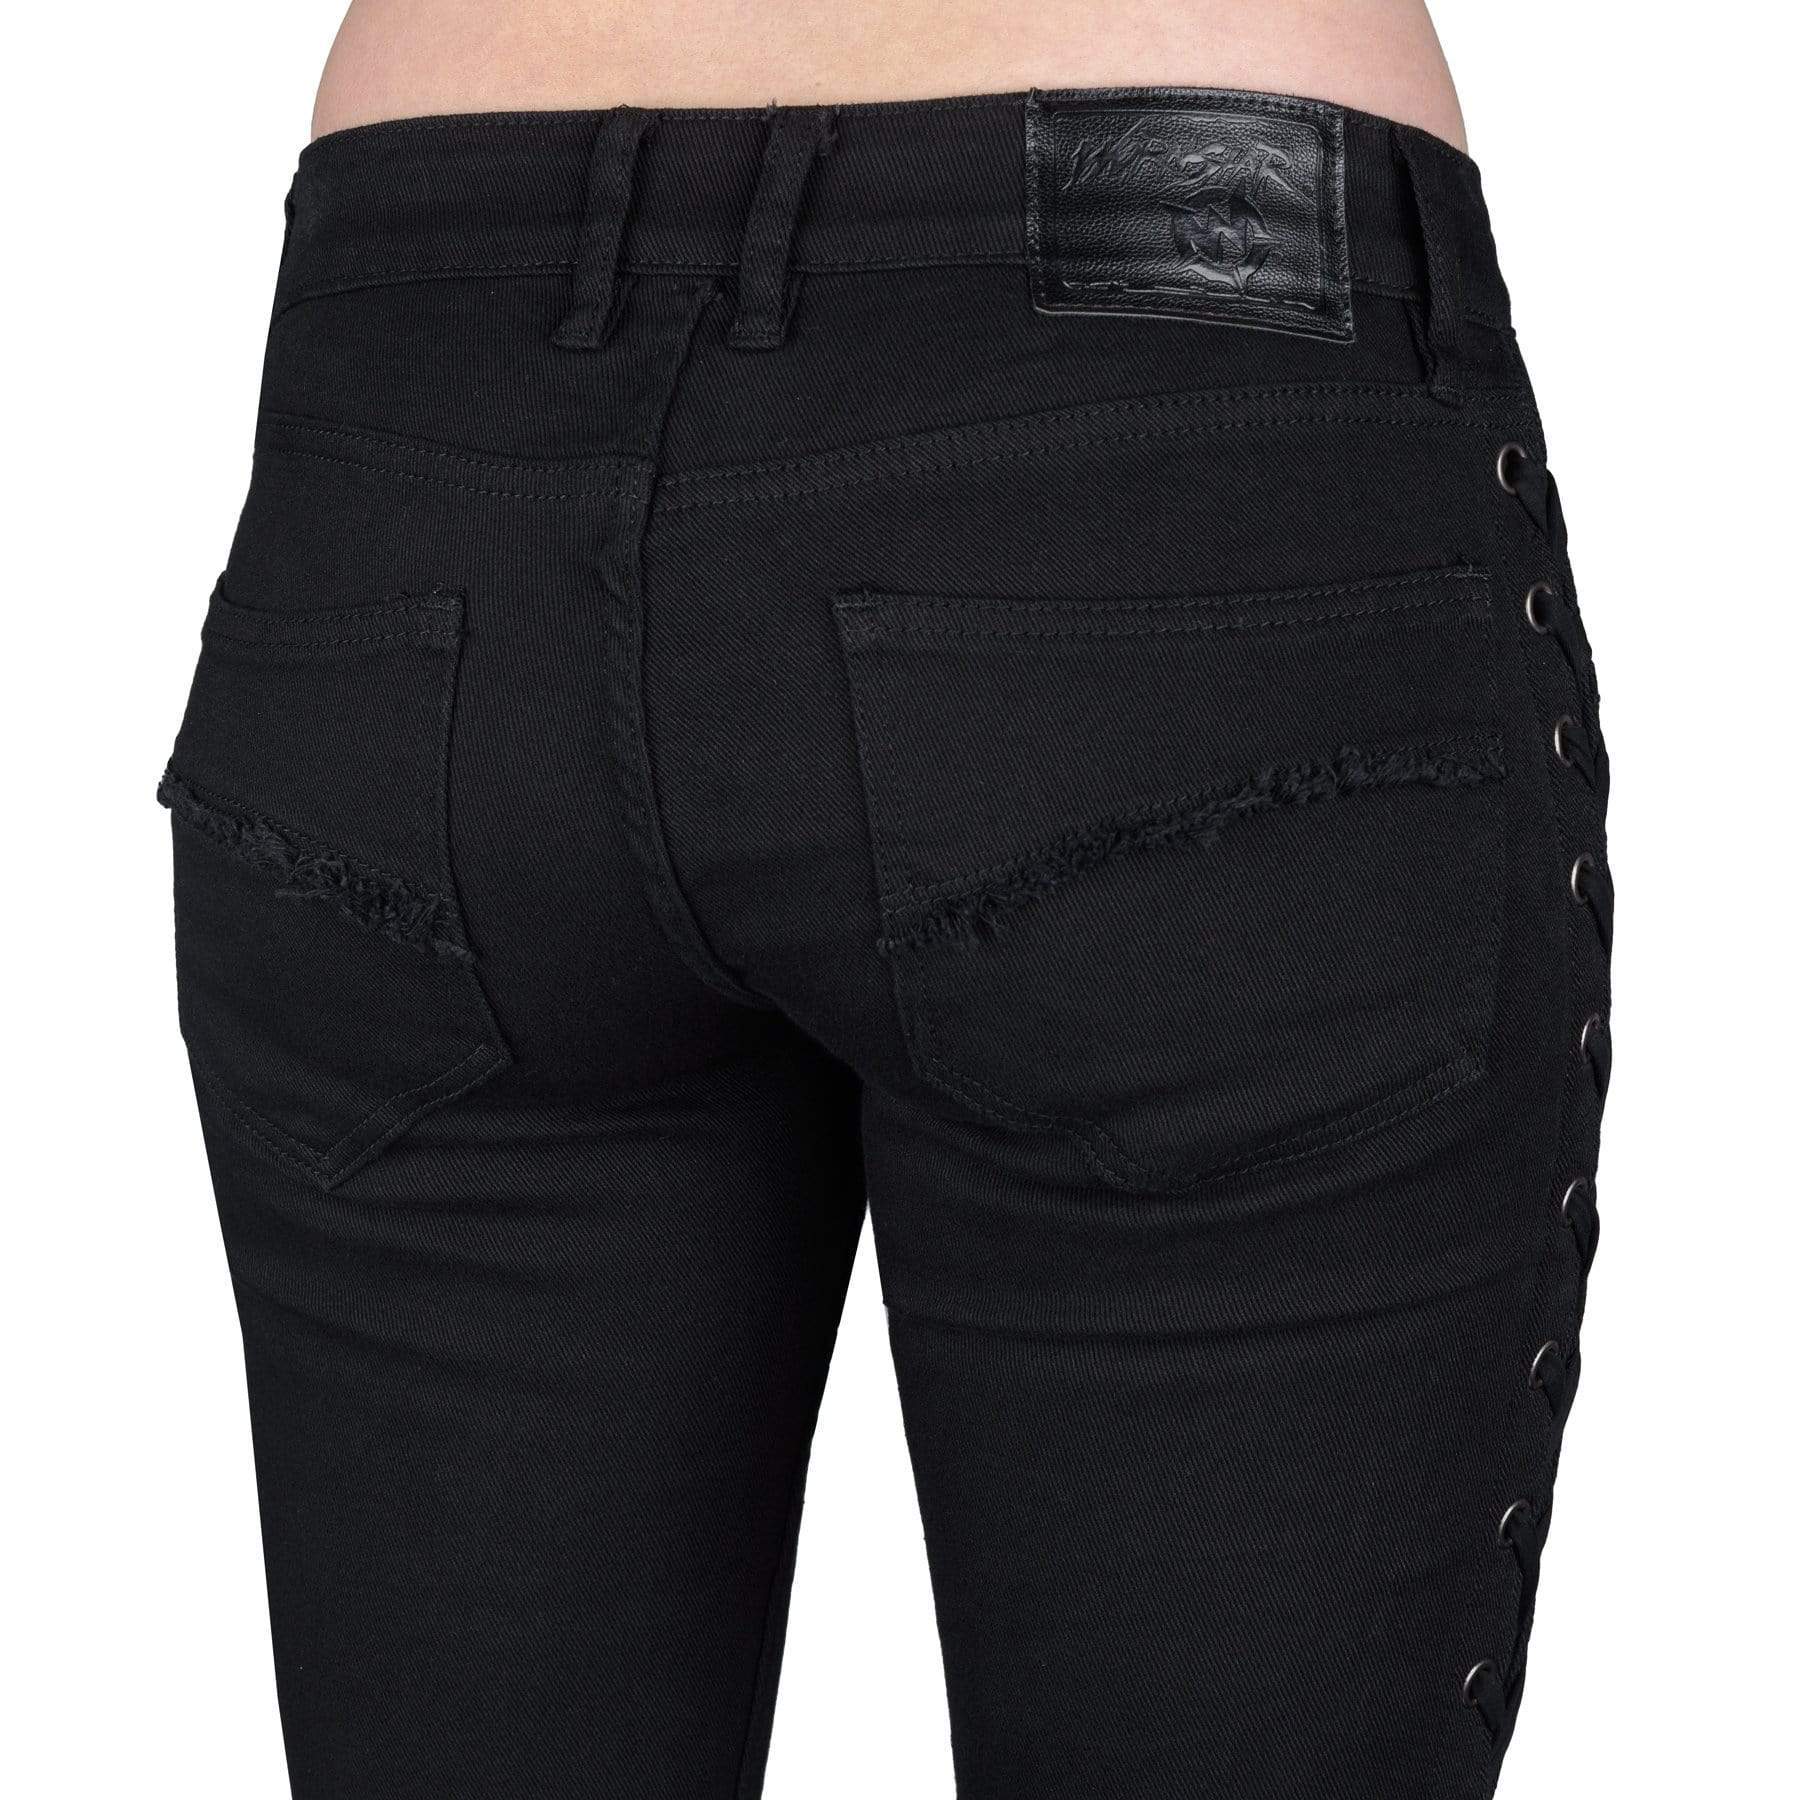 Wornstar Clothing Hellraiser Side Laced Unisex Jeans - Black